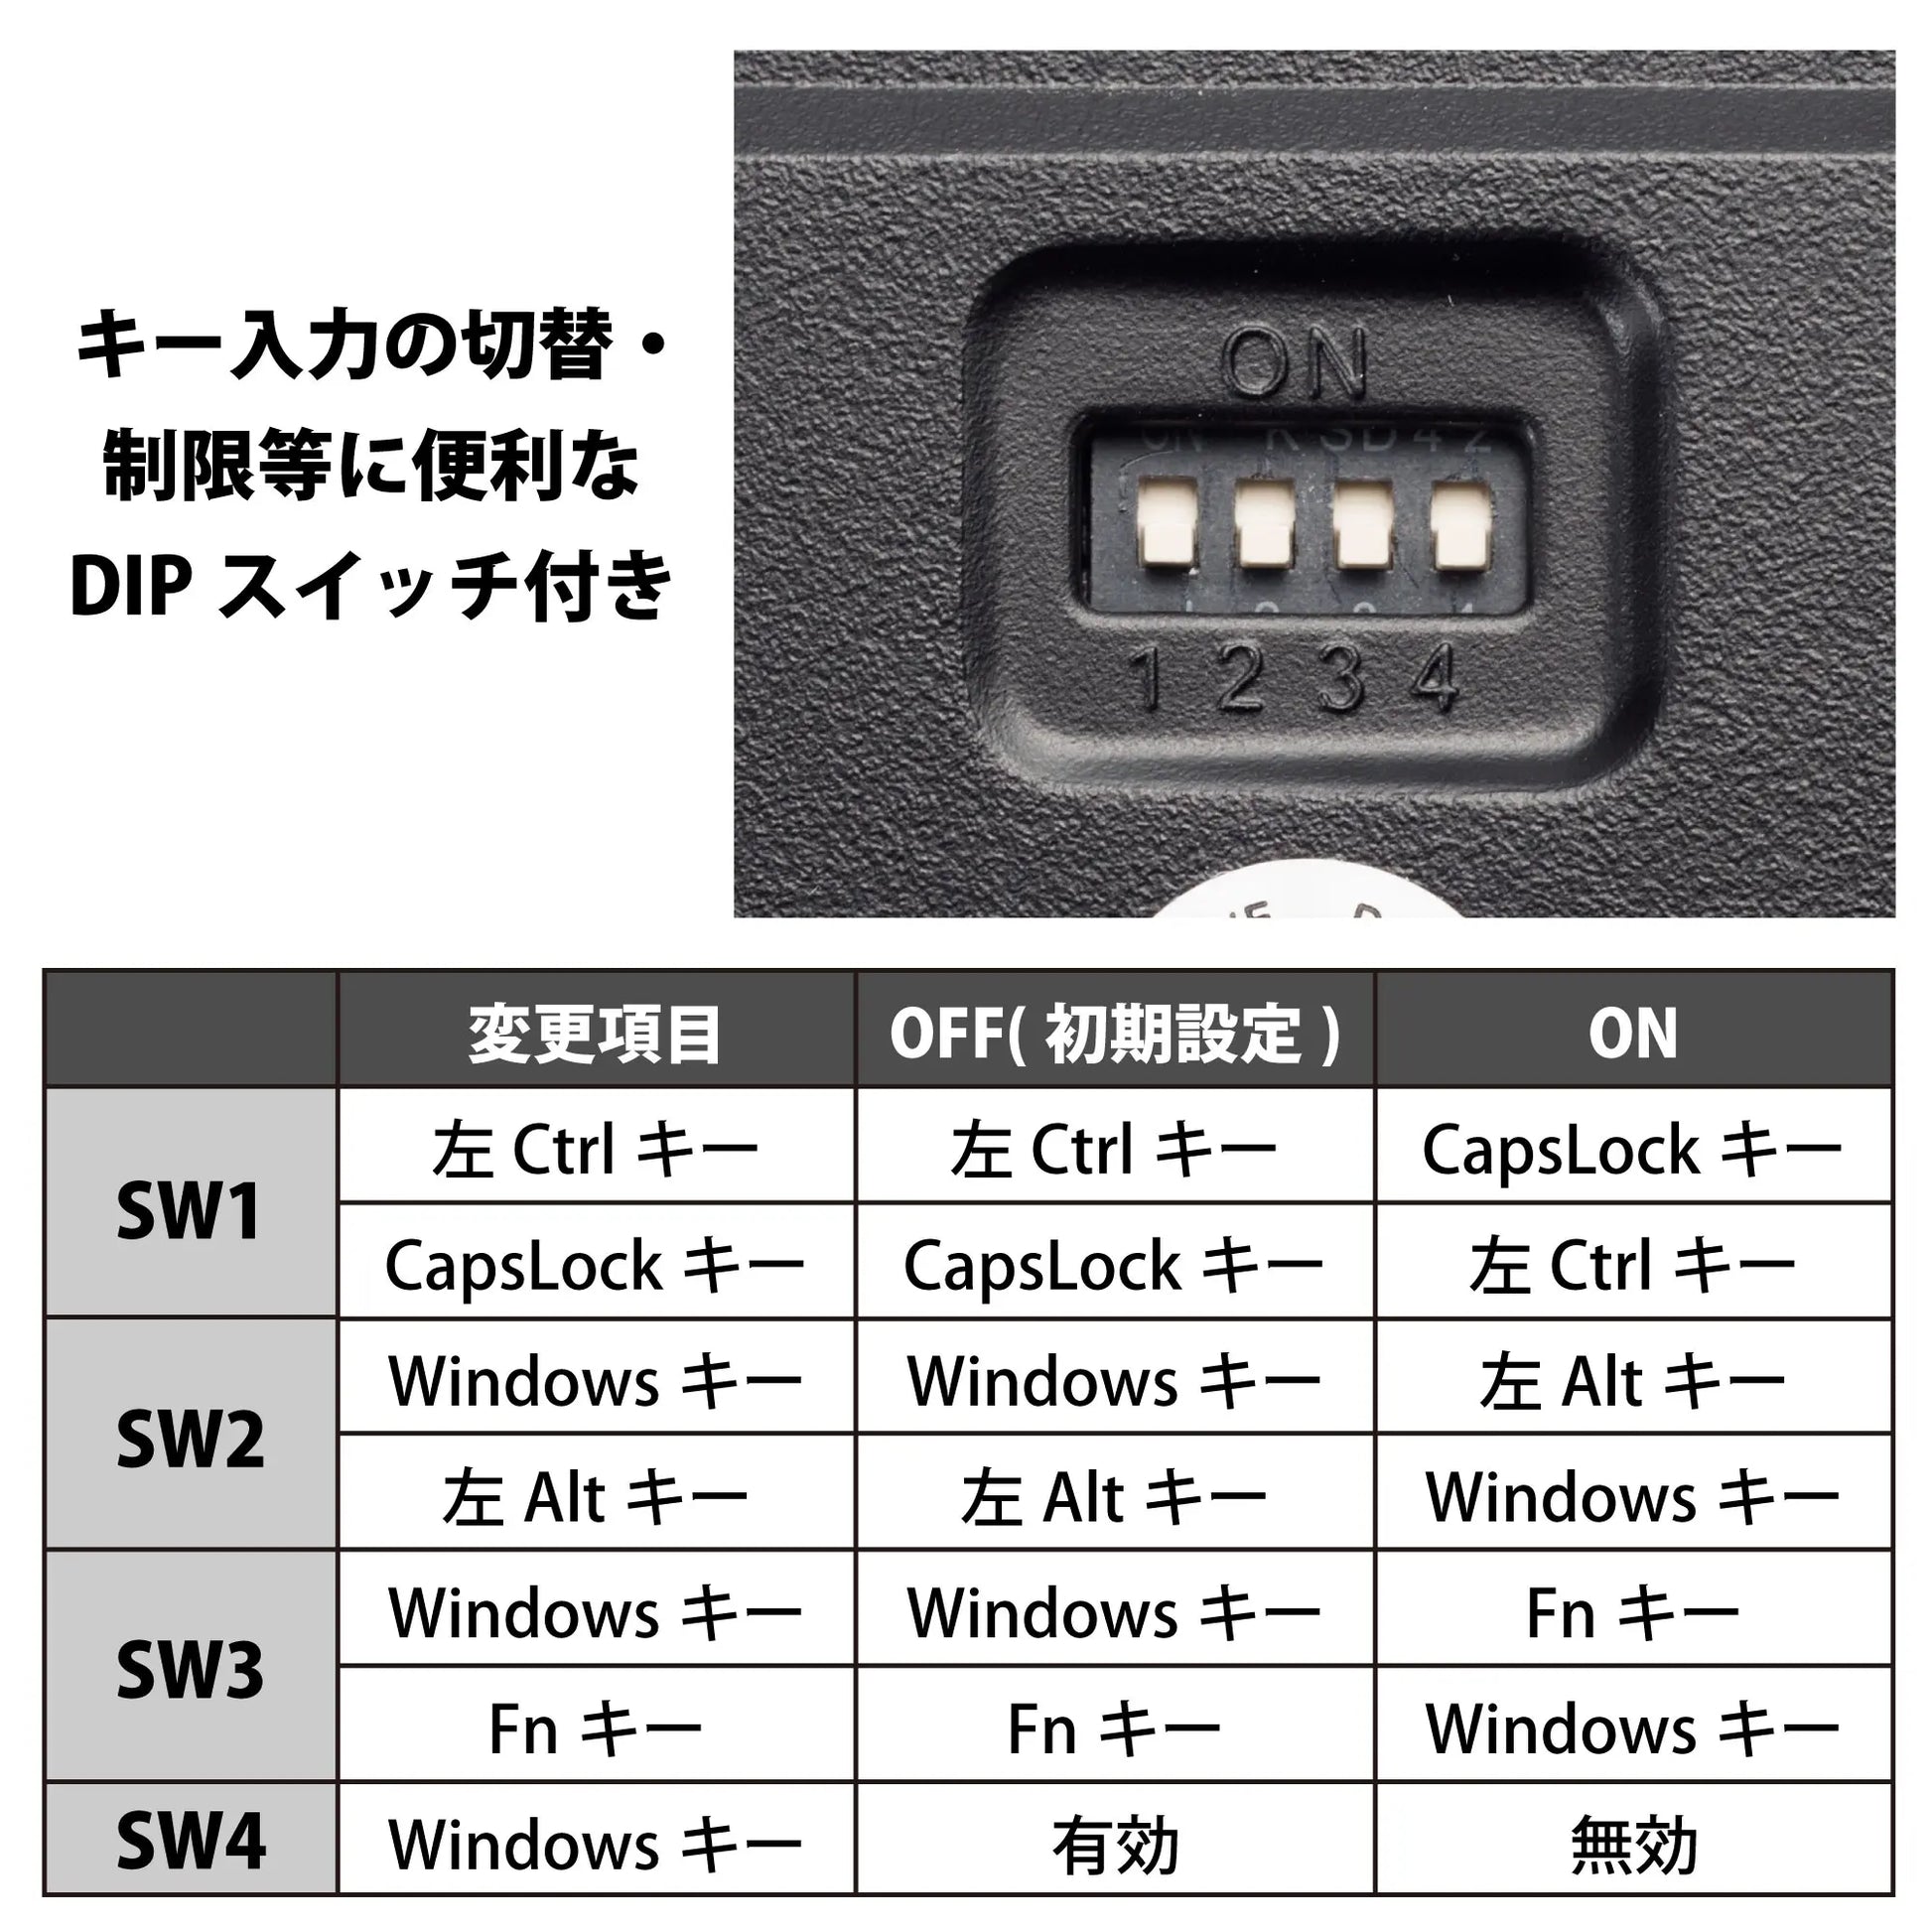 ARCHISS ProgresTouch TINY ワイヤーキープラー付 日本語